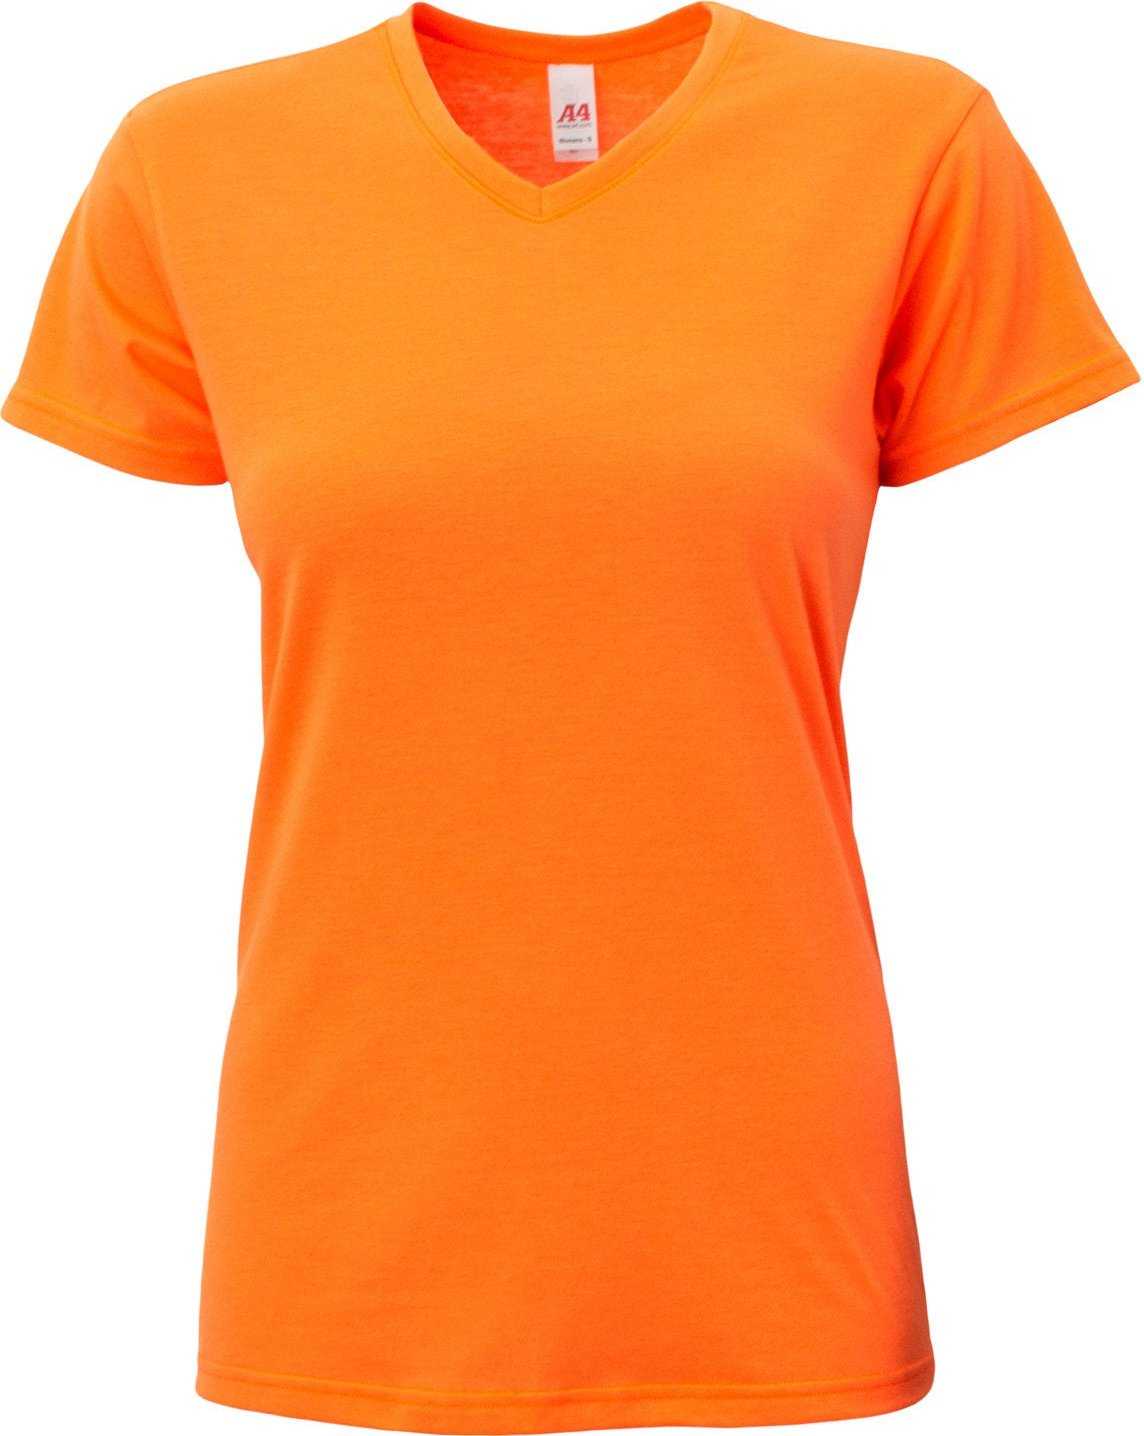 A4 NW3013 Ladies' Softek V-Neck T-Shirt - SAFETY ORANGE - HIT a Double - 2